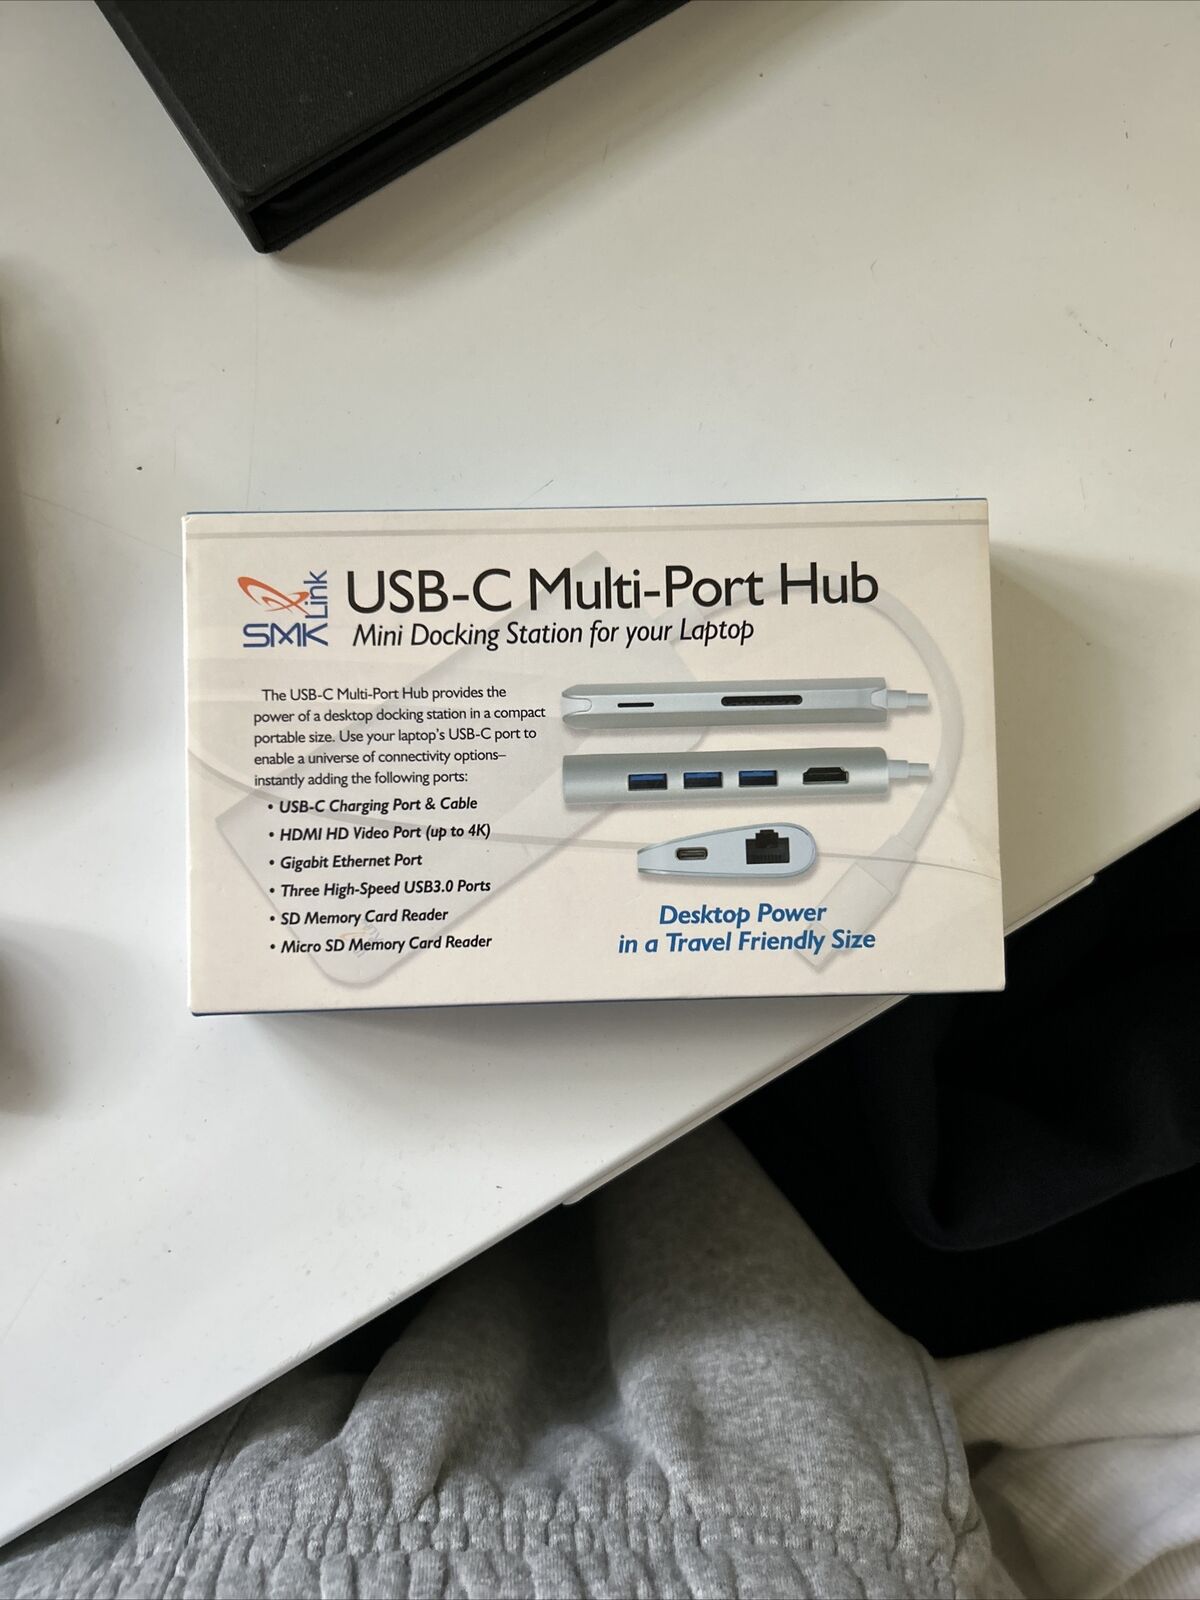 SMK-Link VP6920 USB-C Multi-Port Hub, USB 3.0 Type-A Ports, SD & MicroSD Slots